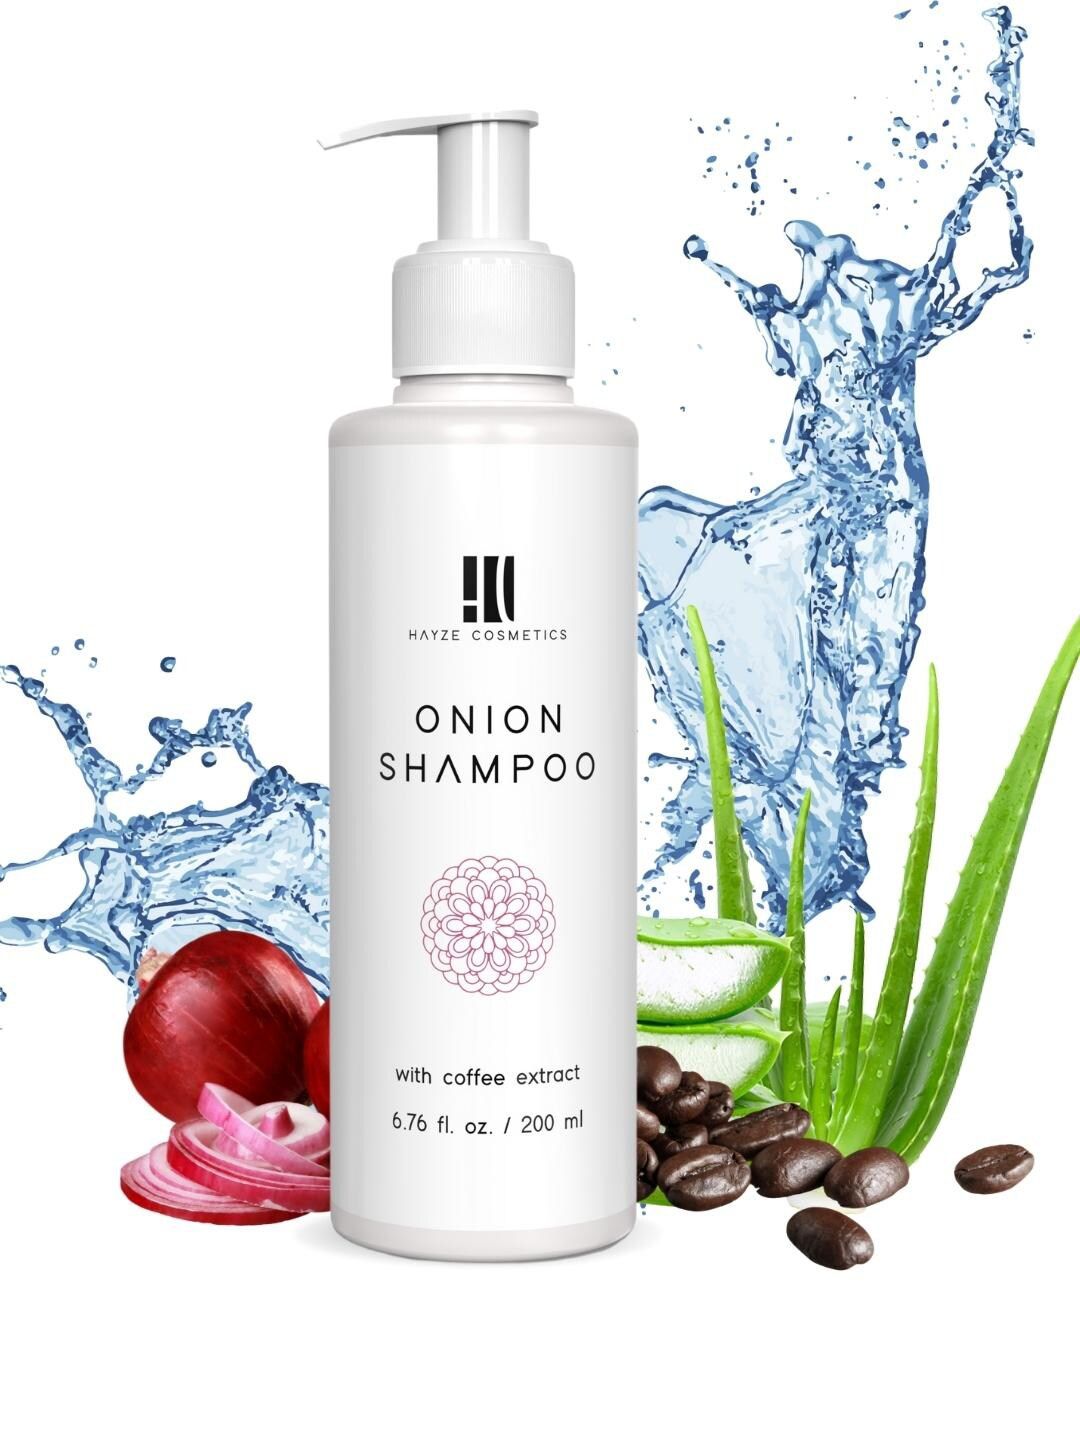 HAYZE COSMETICS Onion Shampoo with Coffee Extract - 200 ml Price in India